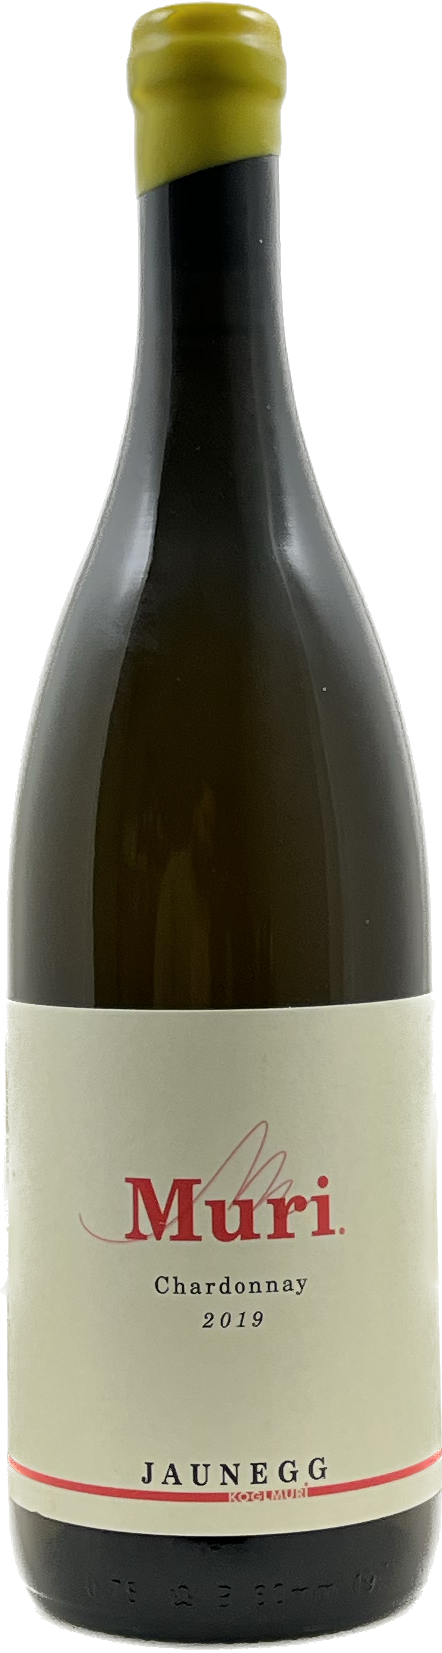 Chardonnay  Muri  - Weingut Jaunegg 2019